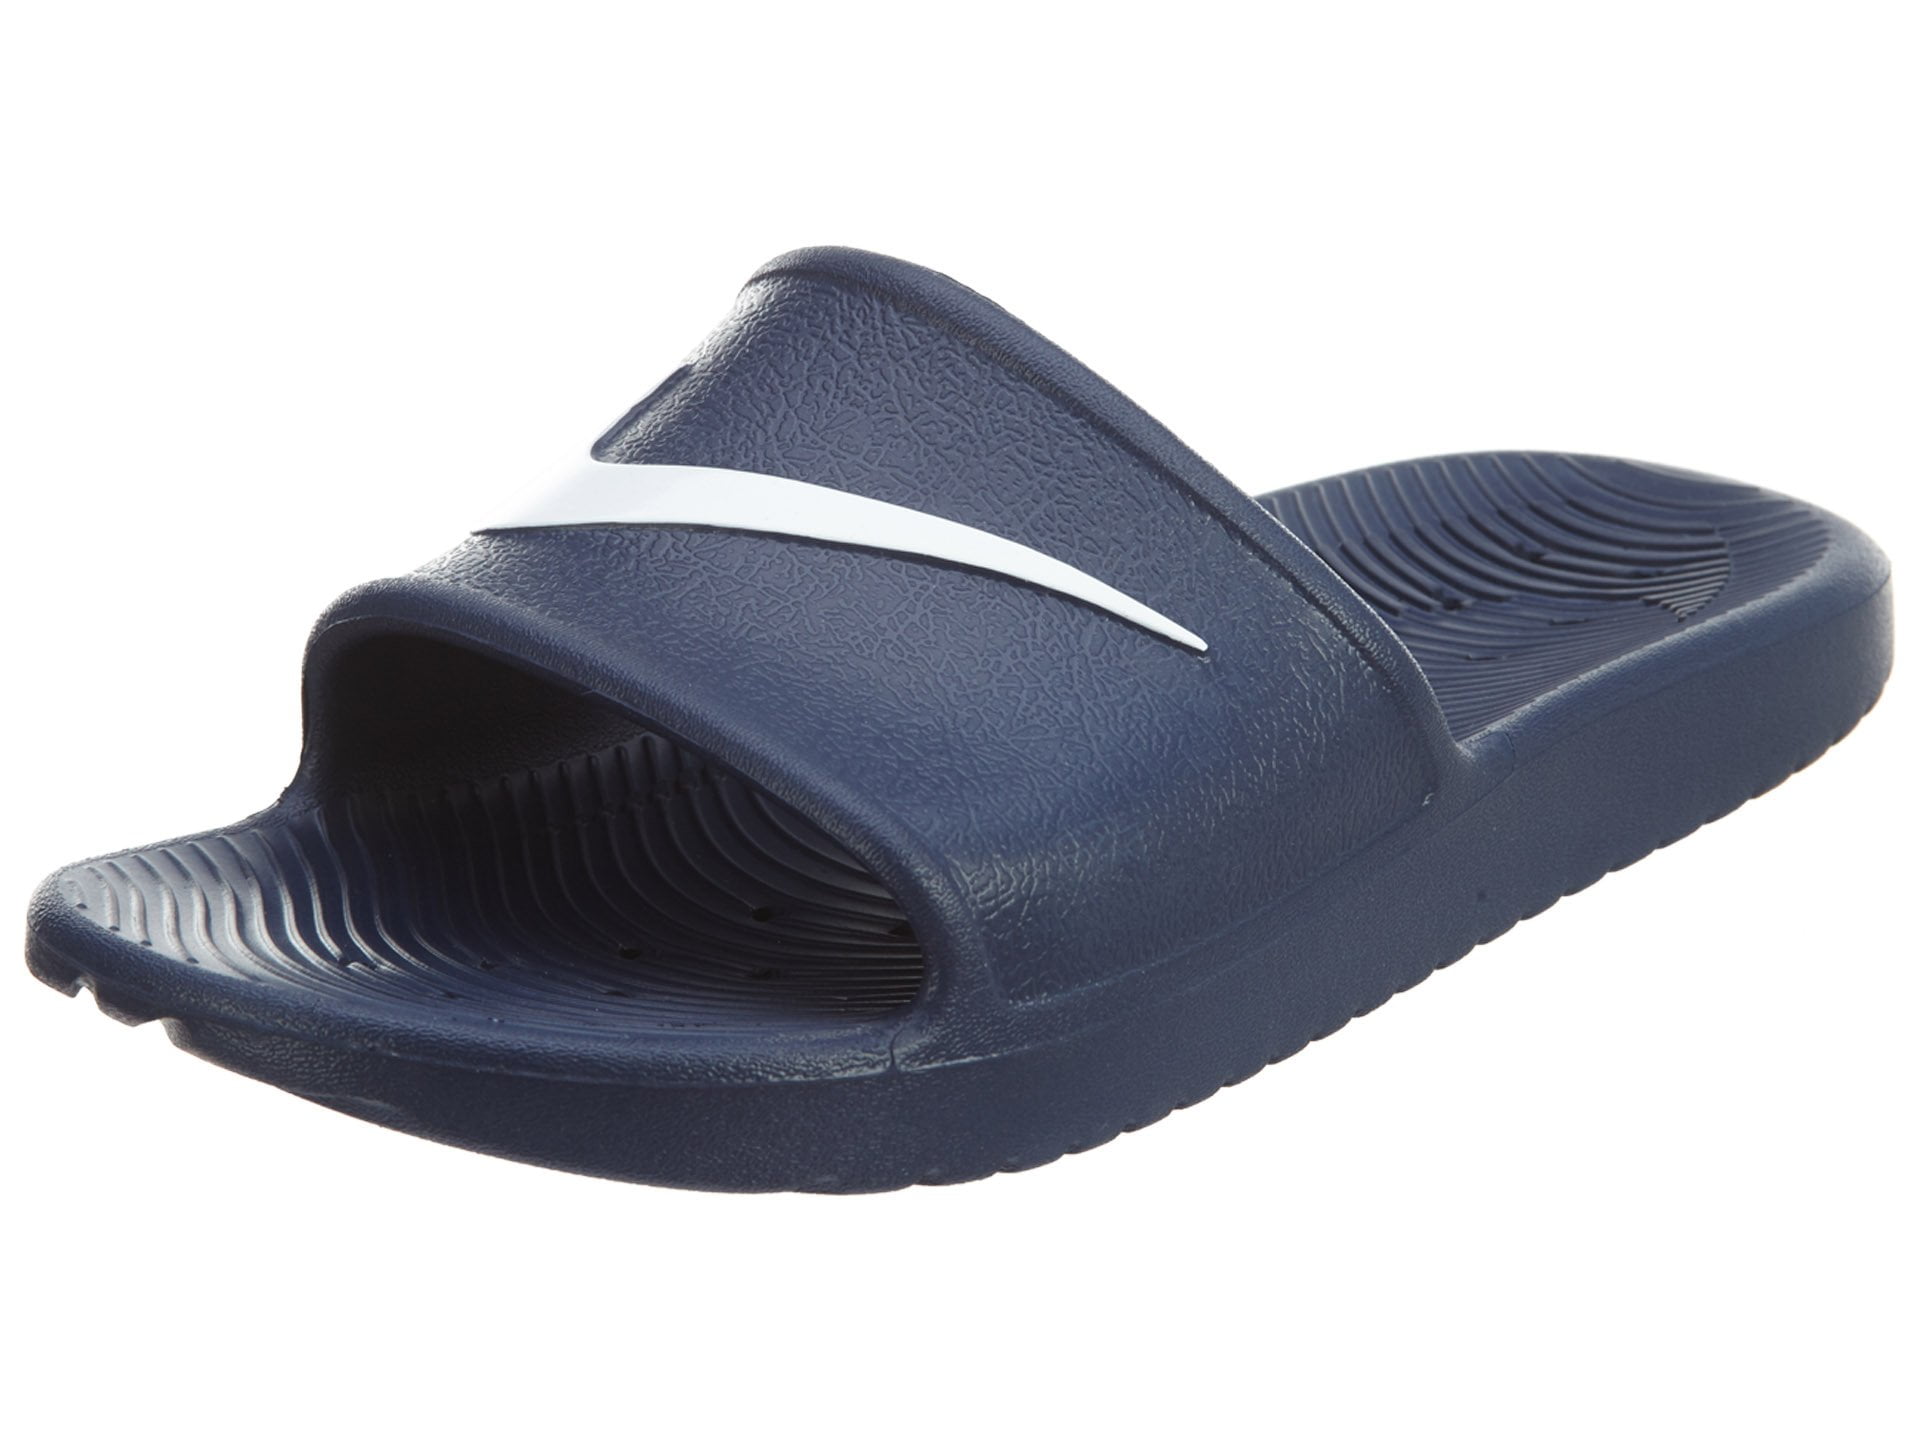 Nike Men's Kawa Shower Slide Sandals Midnight Navy/White 7 (Midnight Navy/White, D(M) US) - Walmart.com